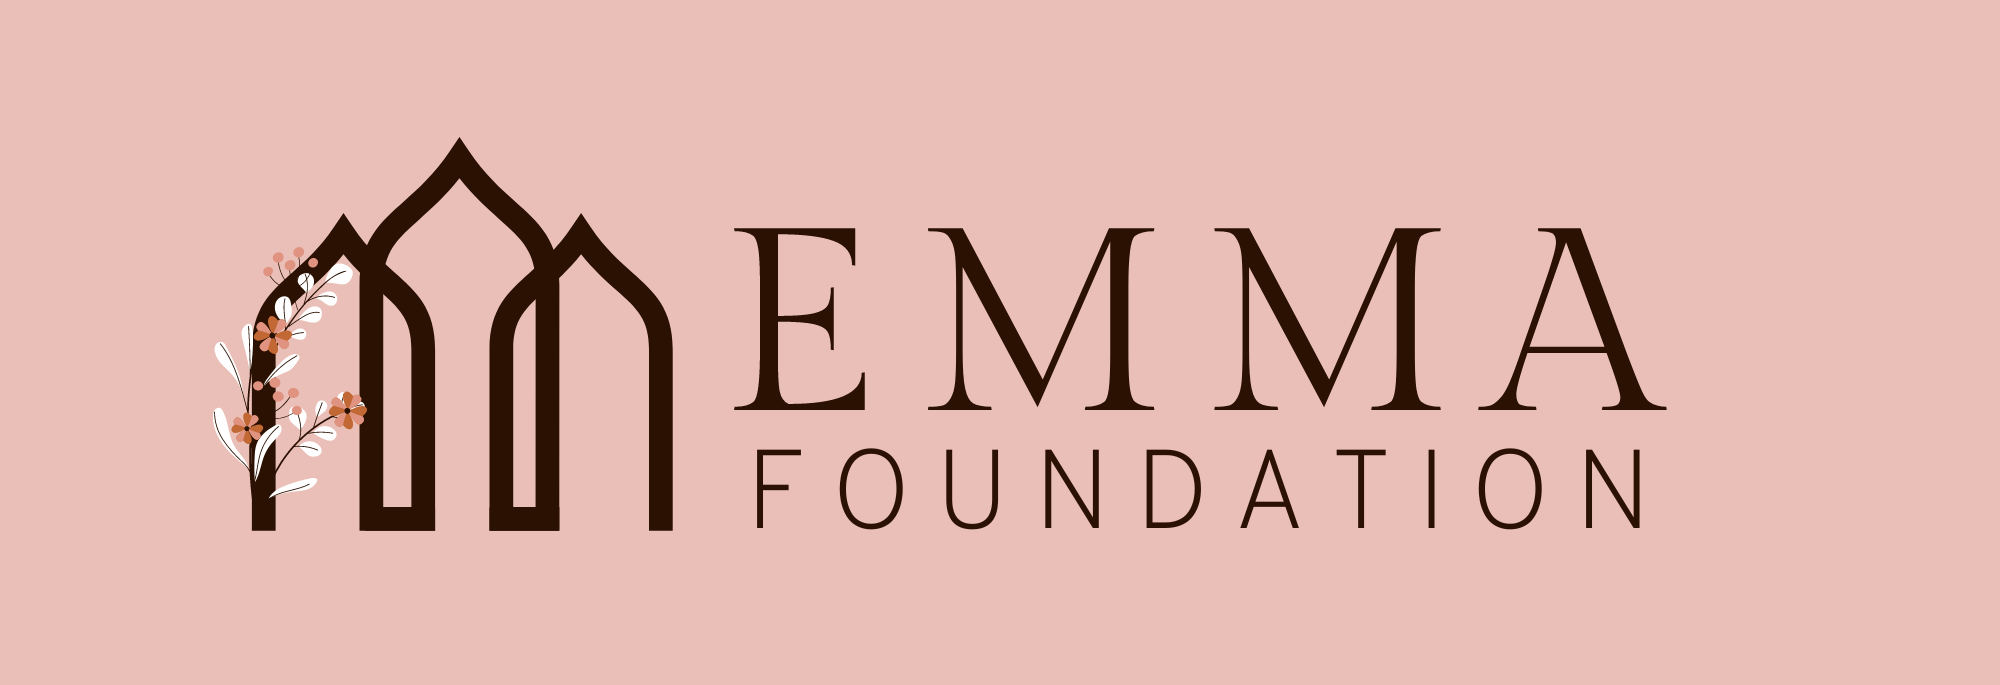 Emma Foundation logo